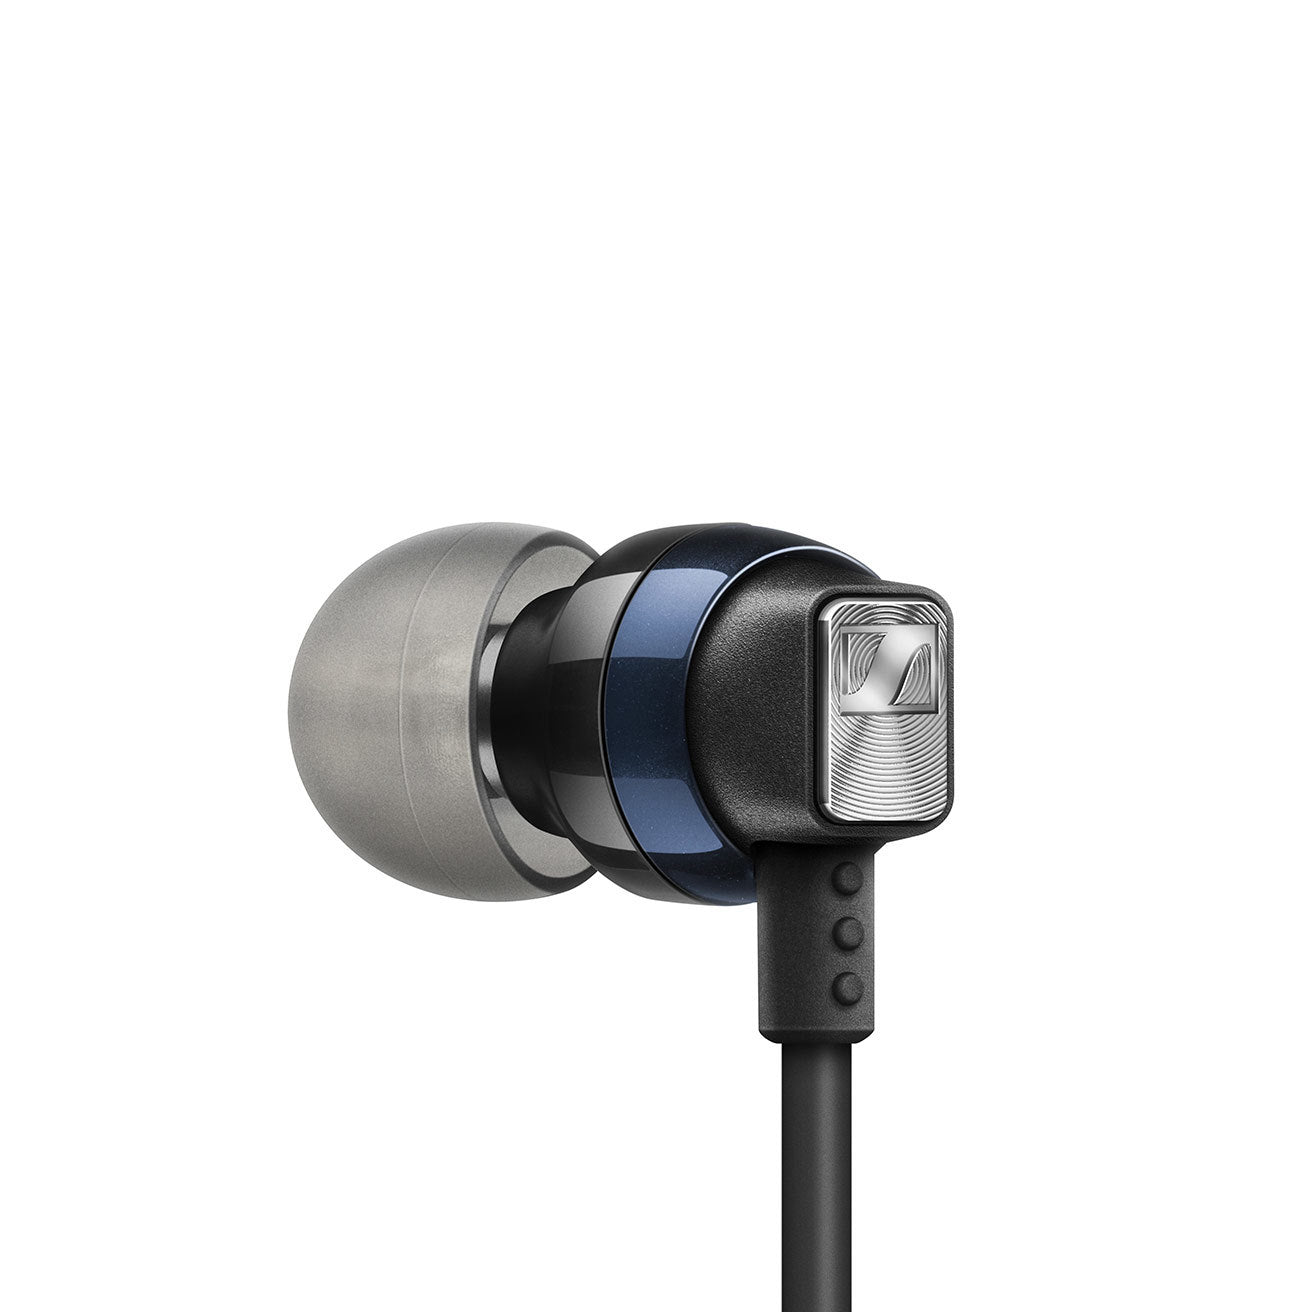 Sennheiser CX 6.00BT Wireless in-Ear Headphones, Bluetooth 4.2